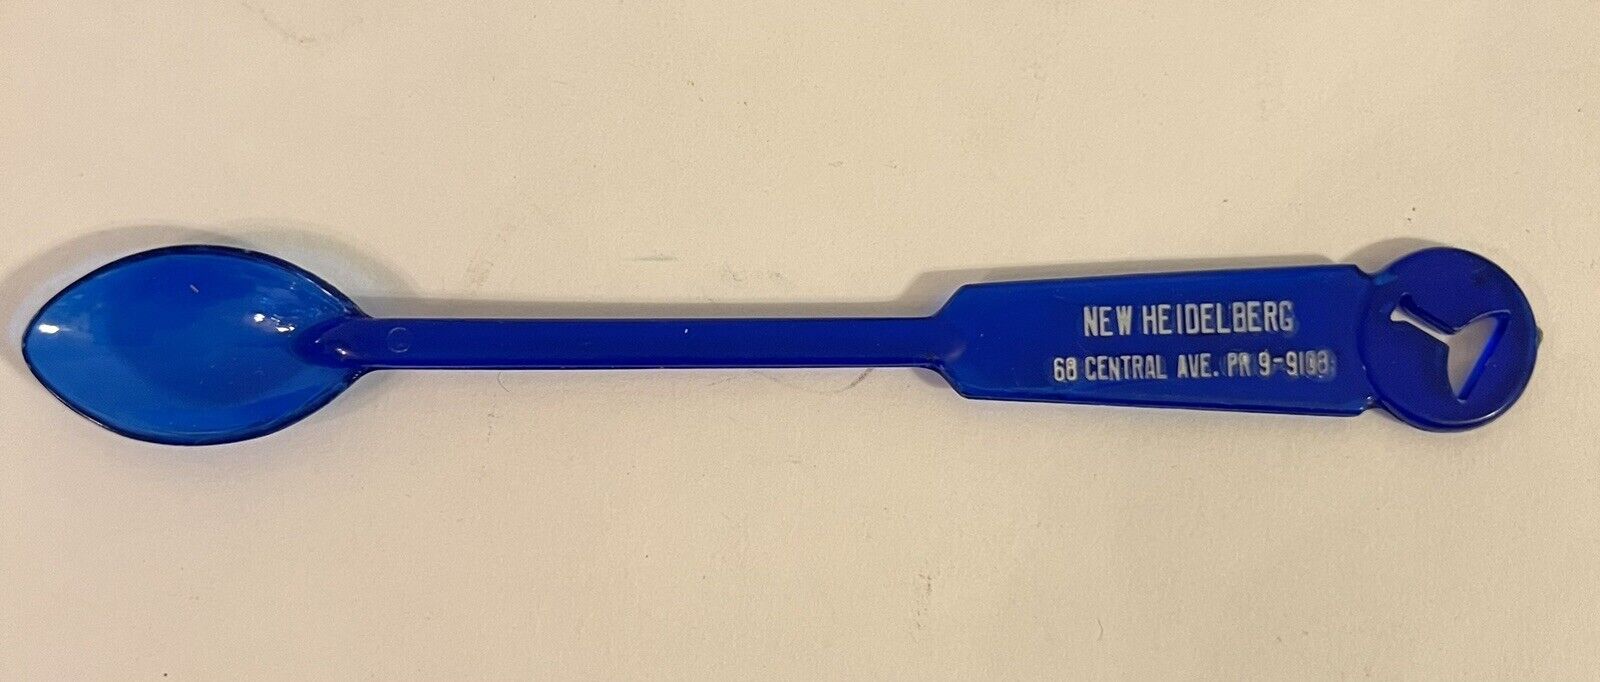 New Heidelberg VTG Swizzle Stir Stick Blue